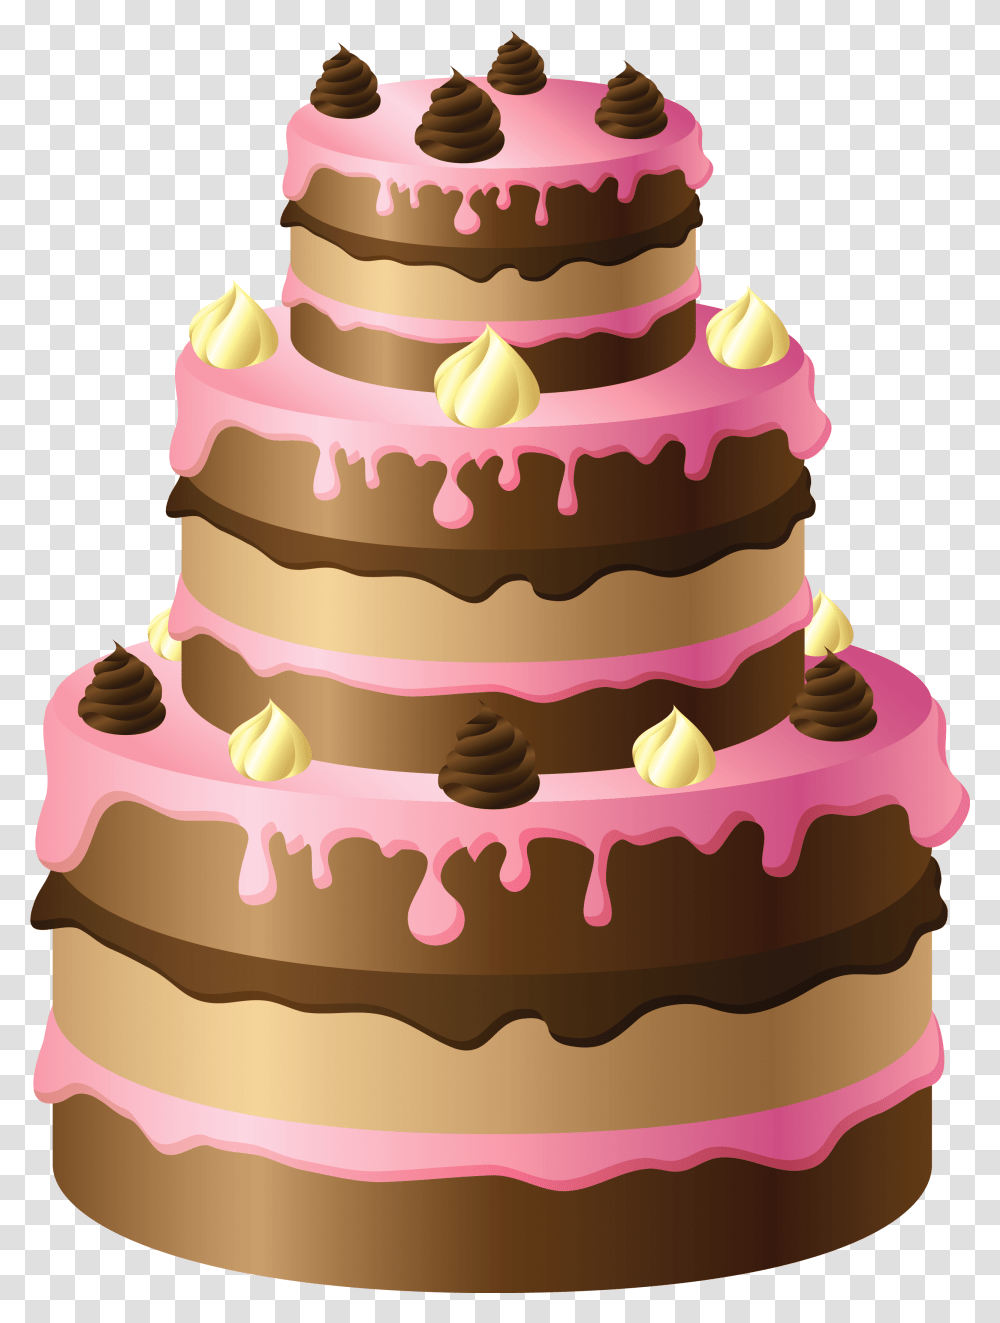 Birthday Cake Clip Art Free Birthday Cake Clipart 2 Auguri Di Buon Compleanno Naomi, Dessert, Food, Wedding Cake, Sweets Transparent Png